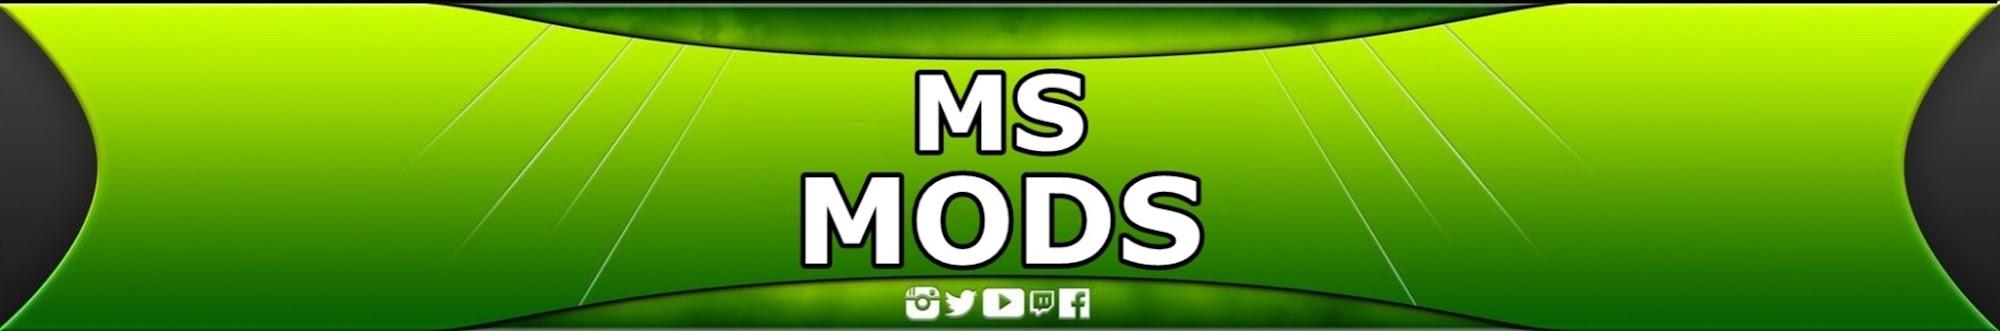 MS MODS